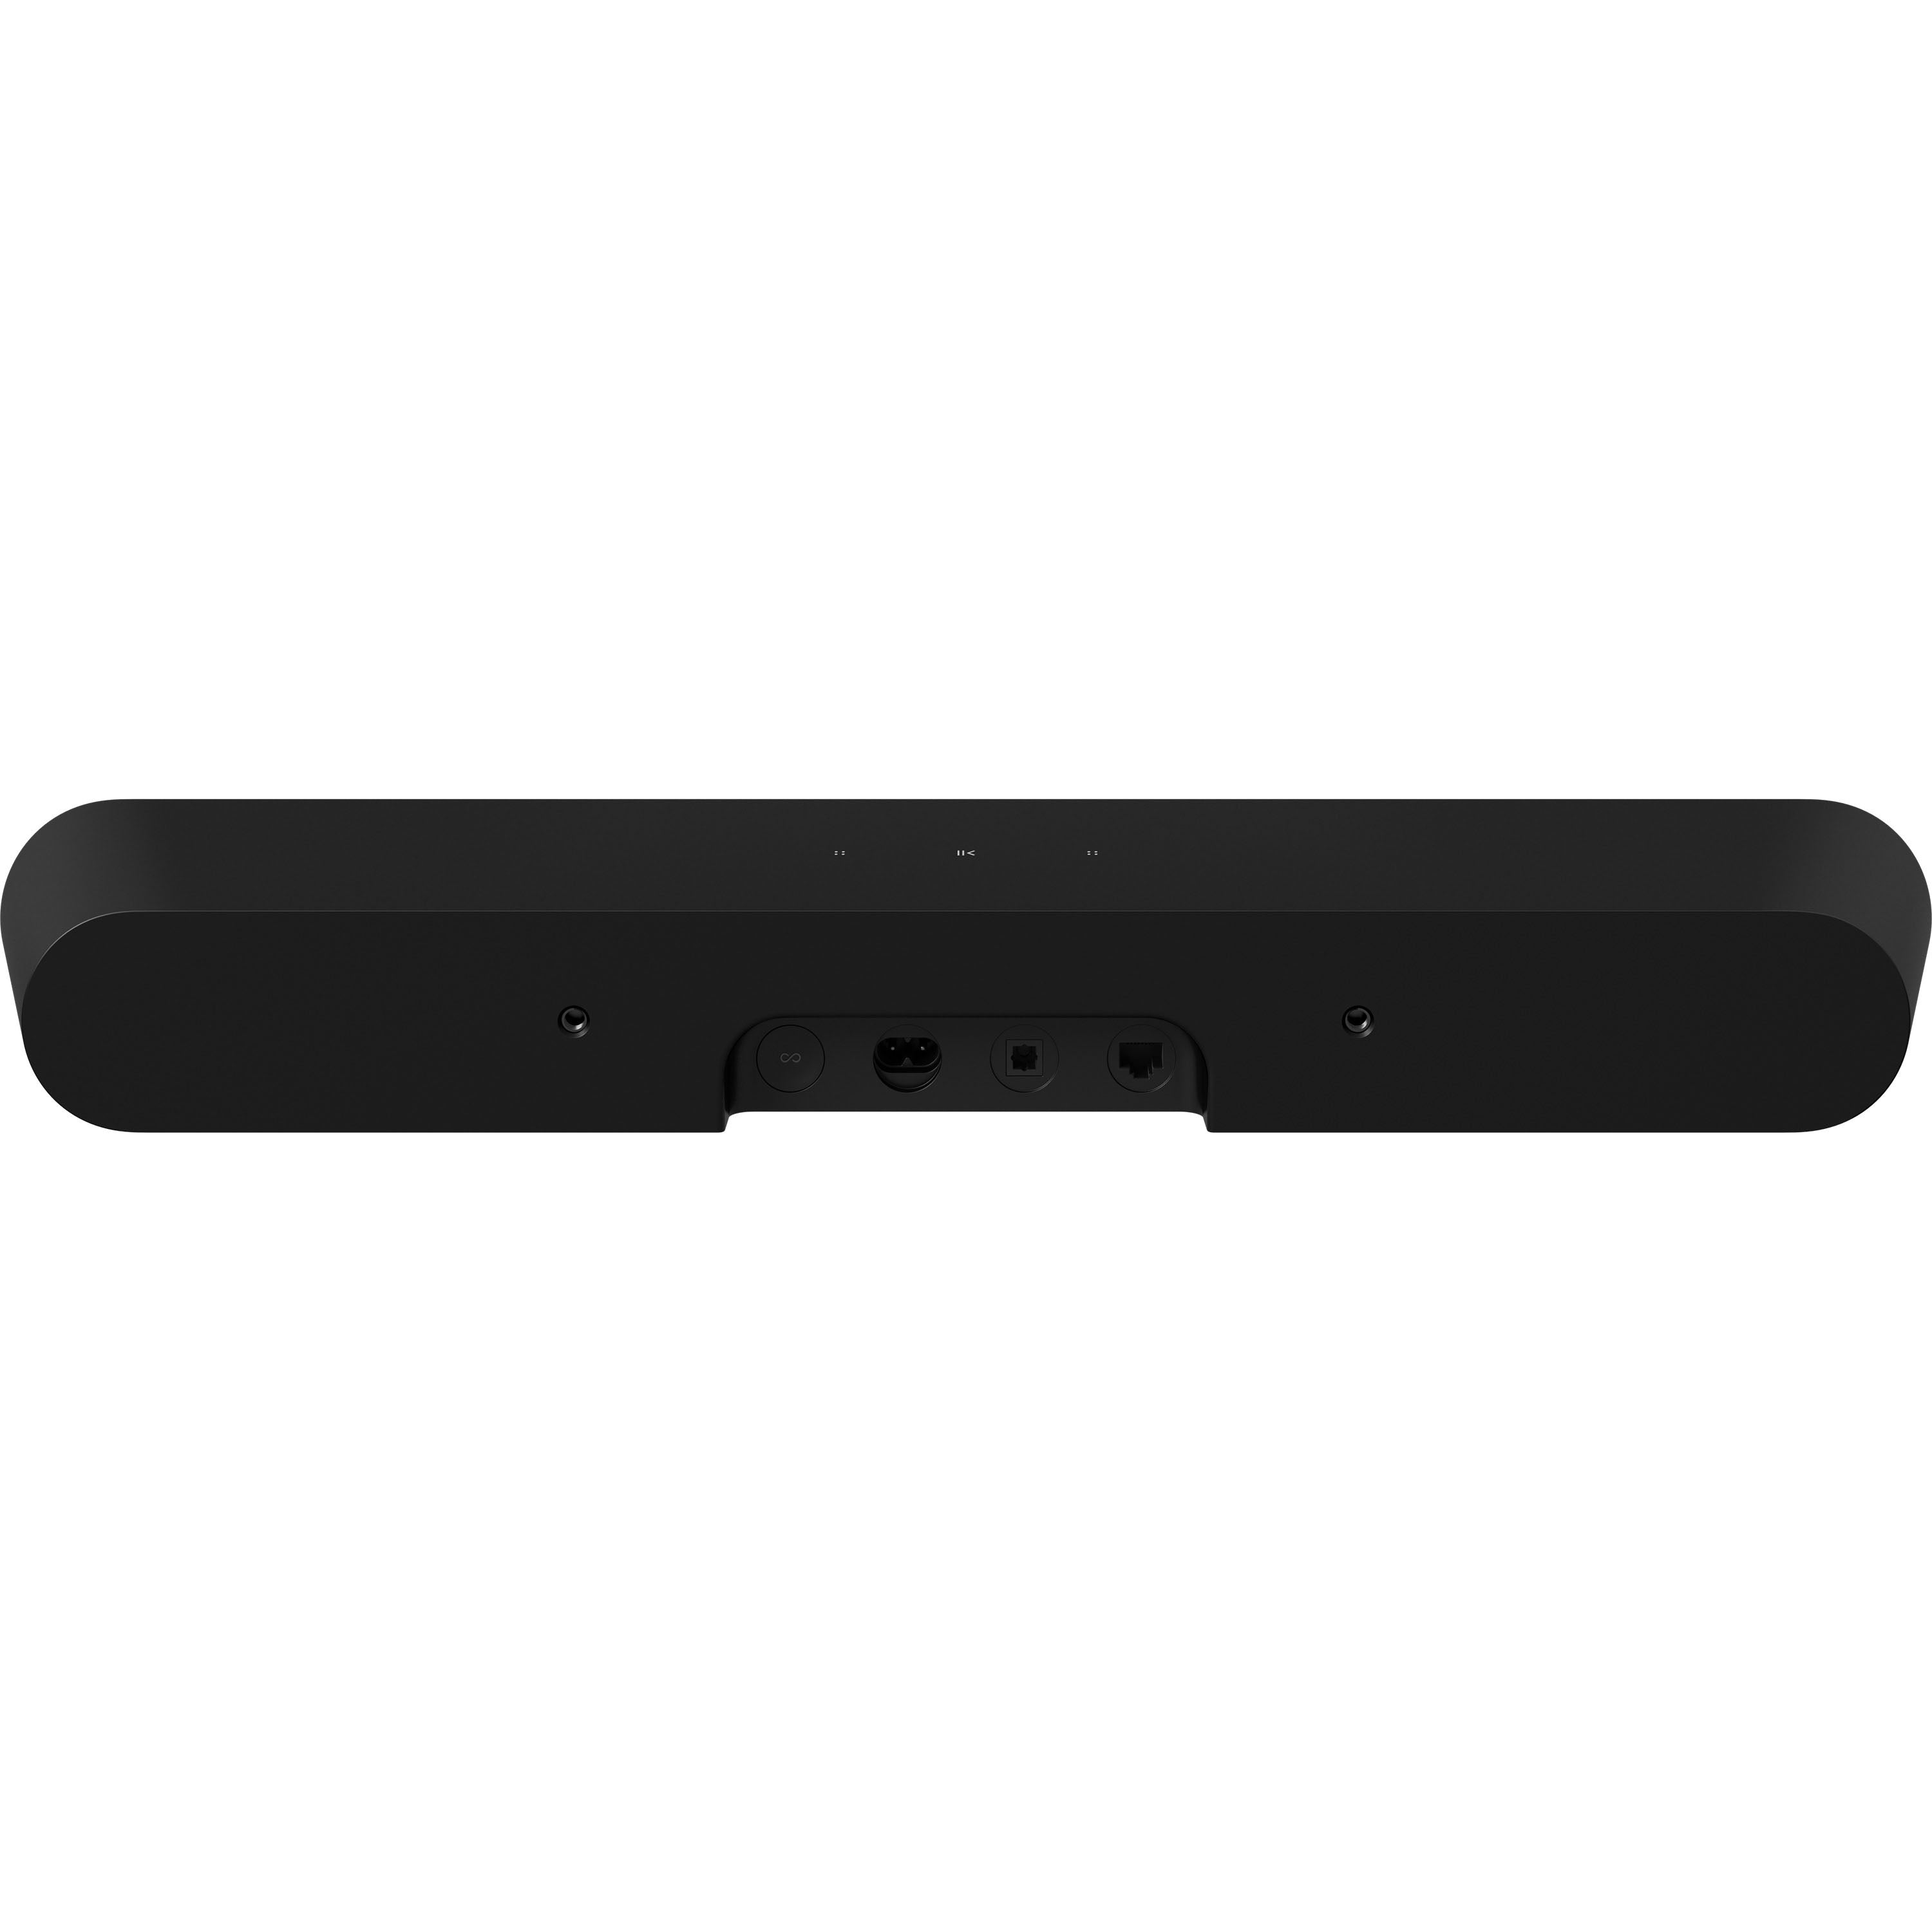 Sonos RAY Soundbar - The Small HD Gaming Soundbar